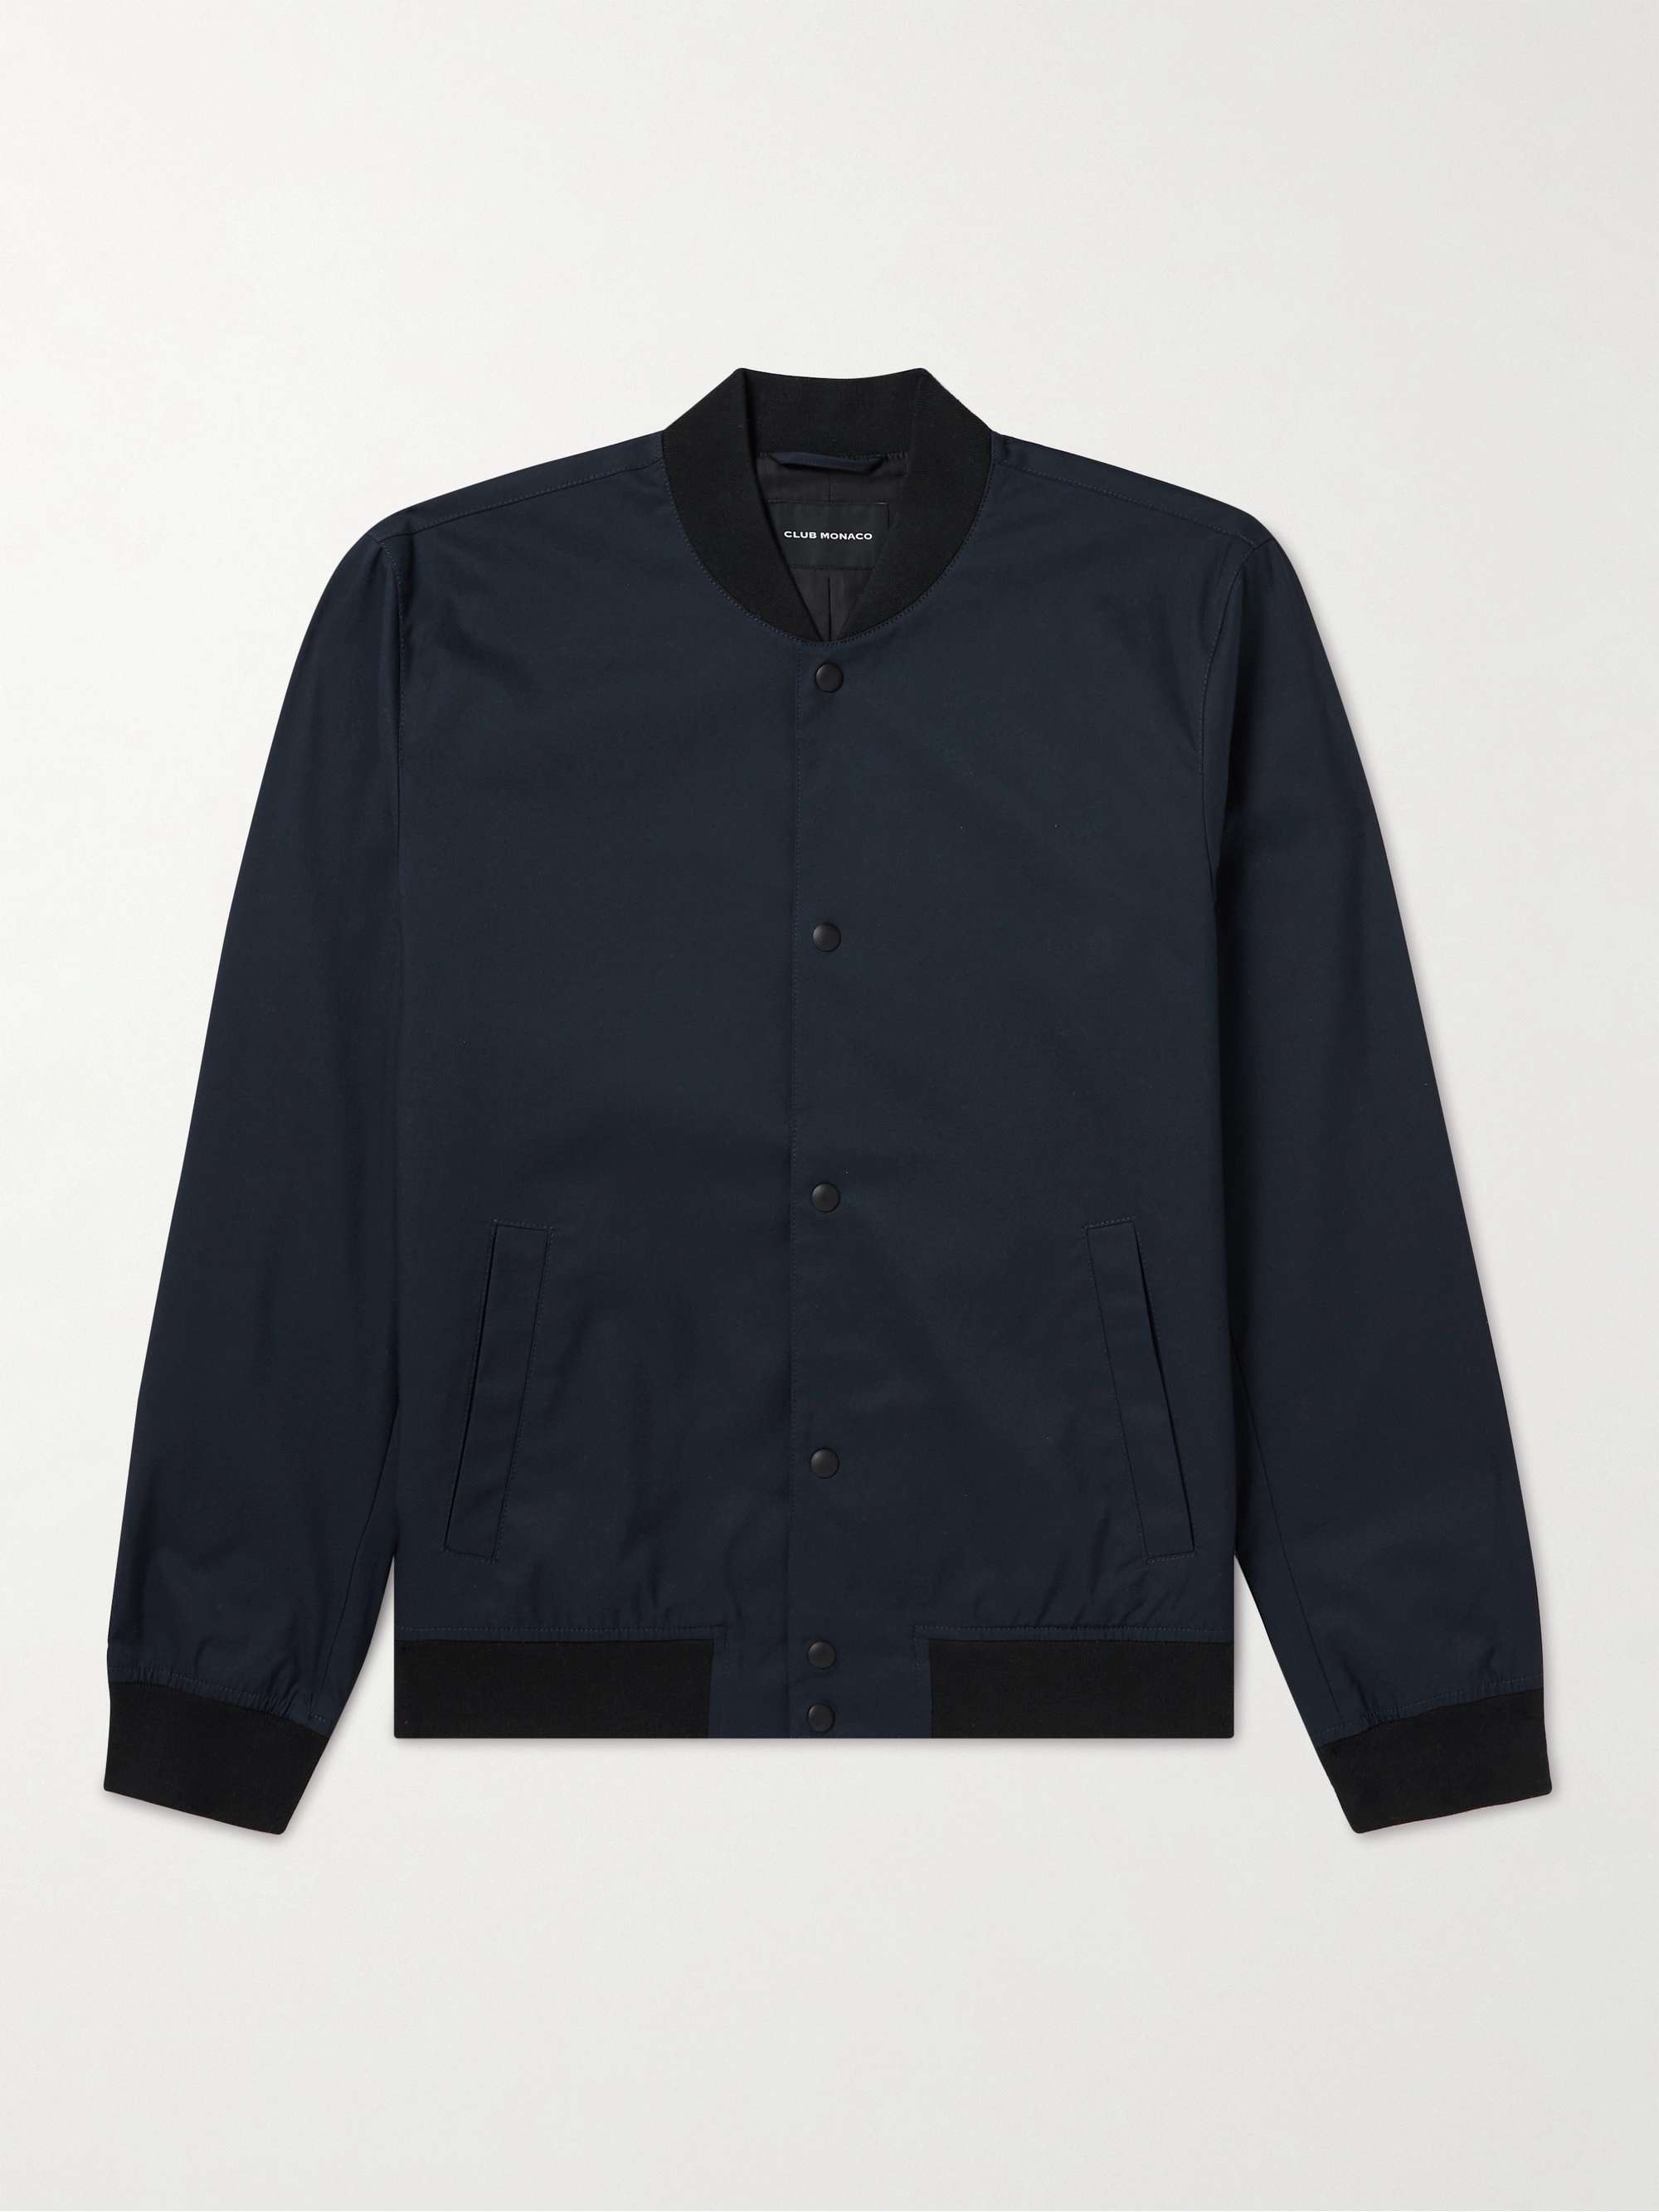 CLUB MONACO Refined Stretch Cotton-Blend Bomber Jacket for Men | MR PORTER